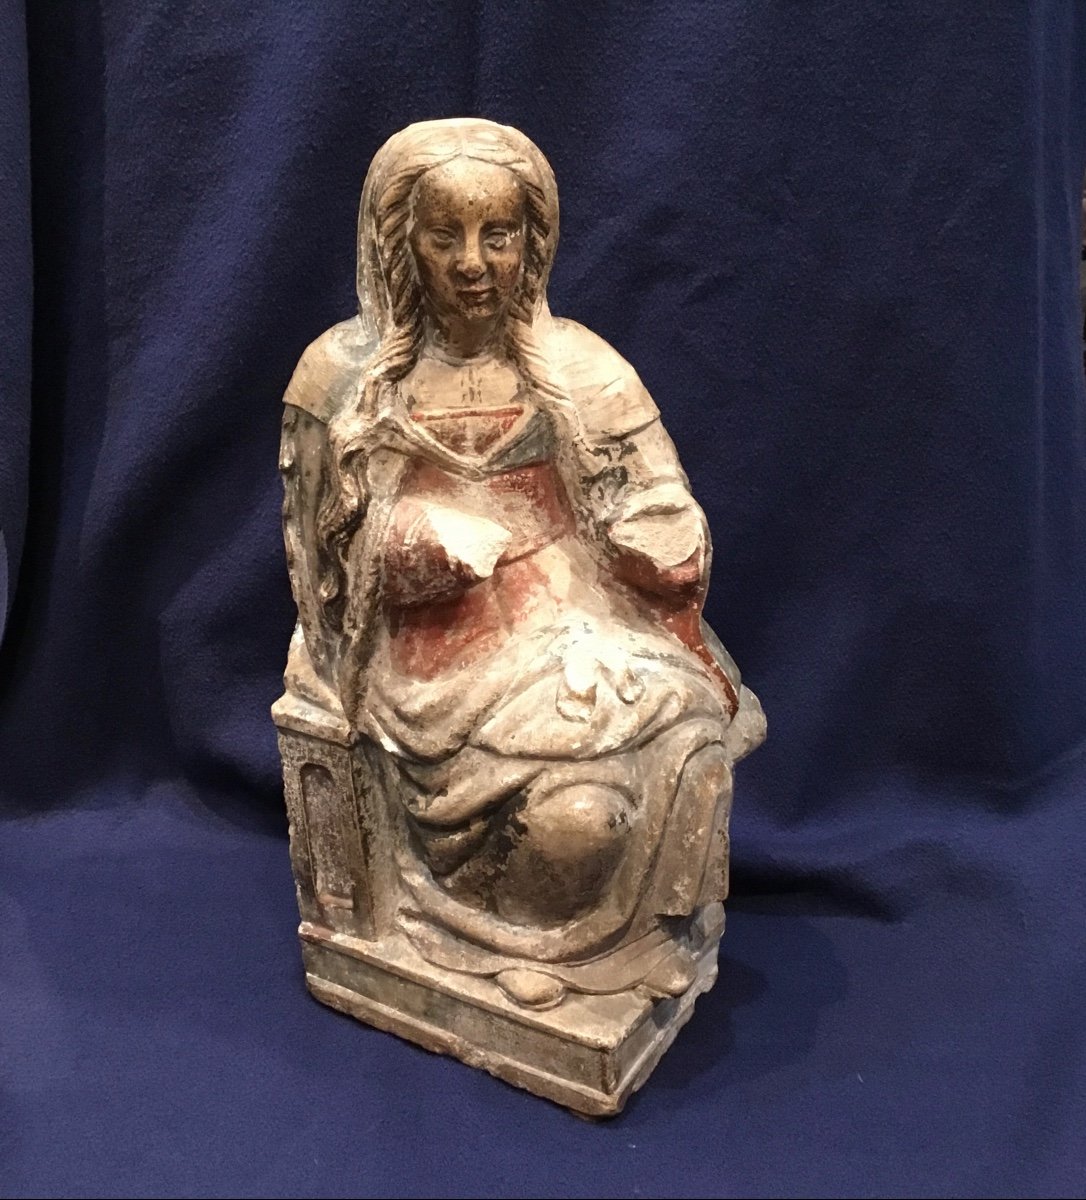 16th - Polychrome Virgin In Stone France